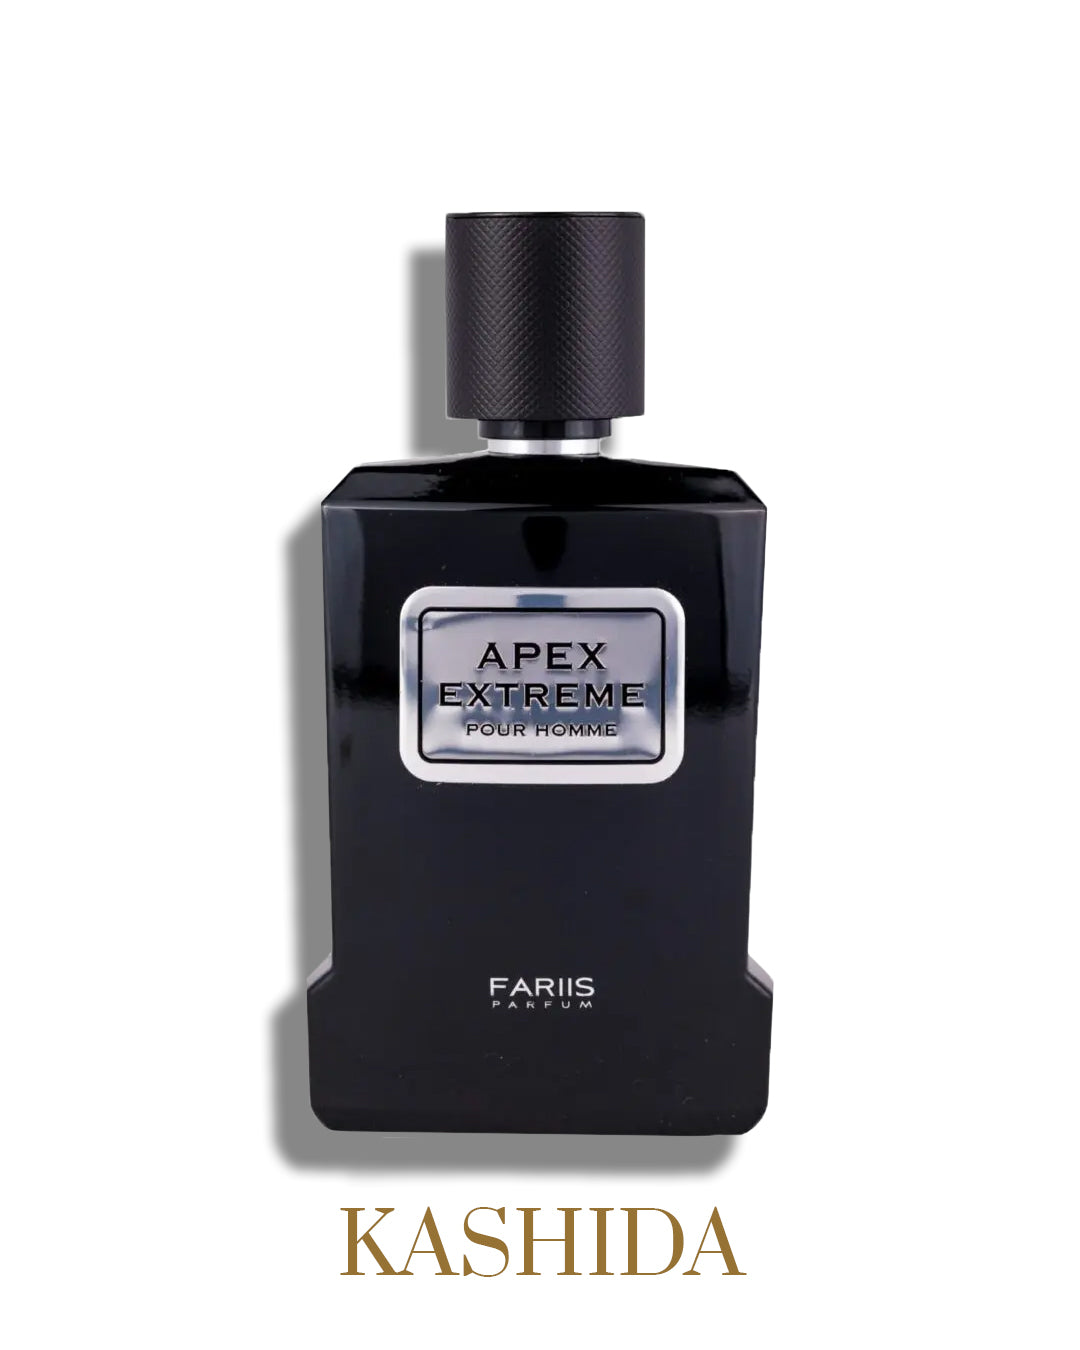 Apa de Parfum Apex Extreme, Fariis, Barbati - 100ml